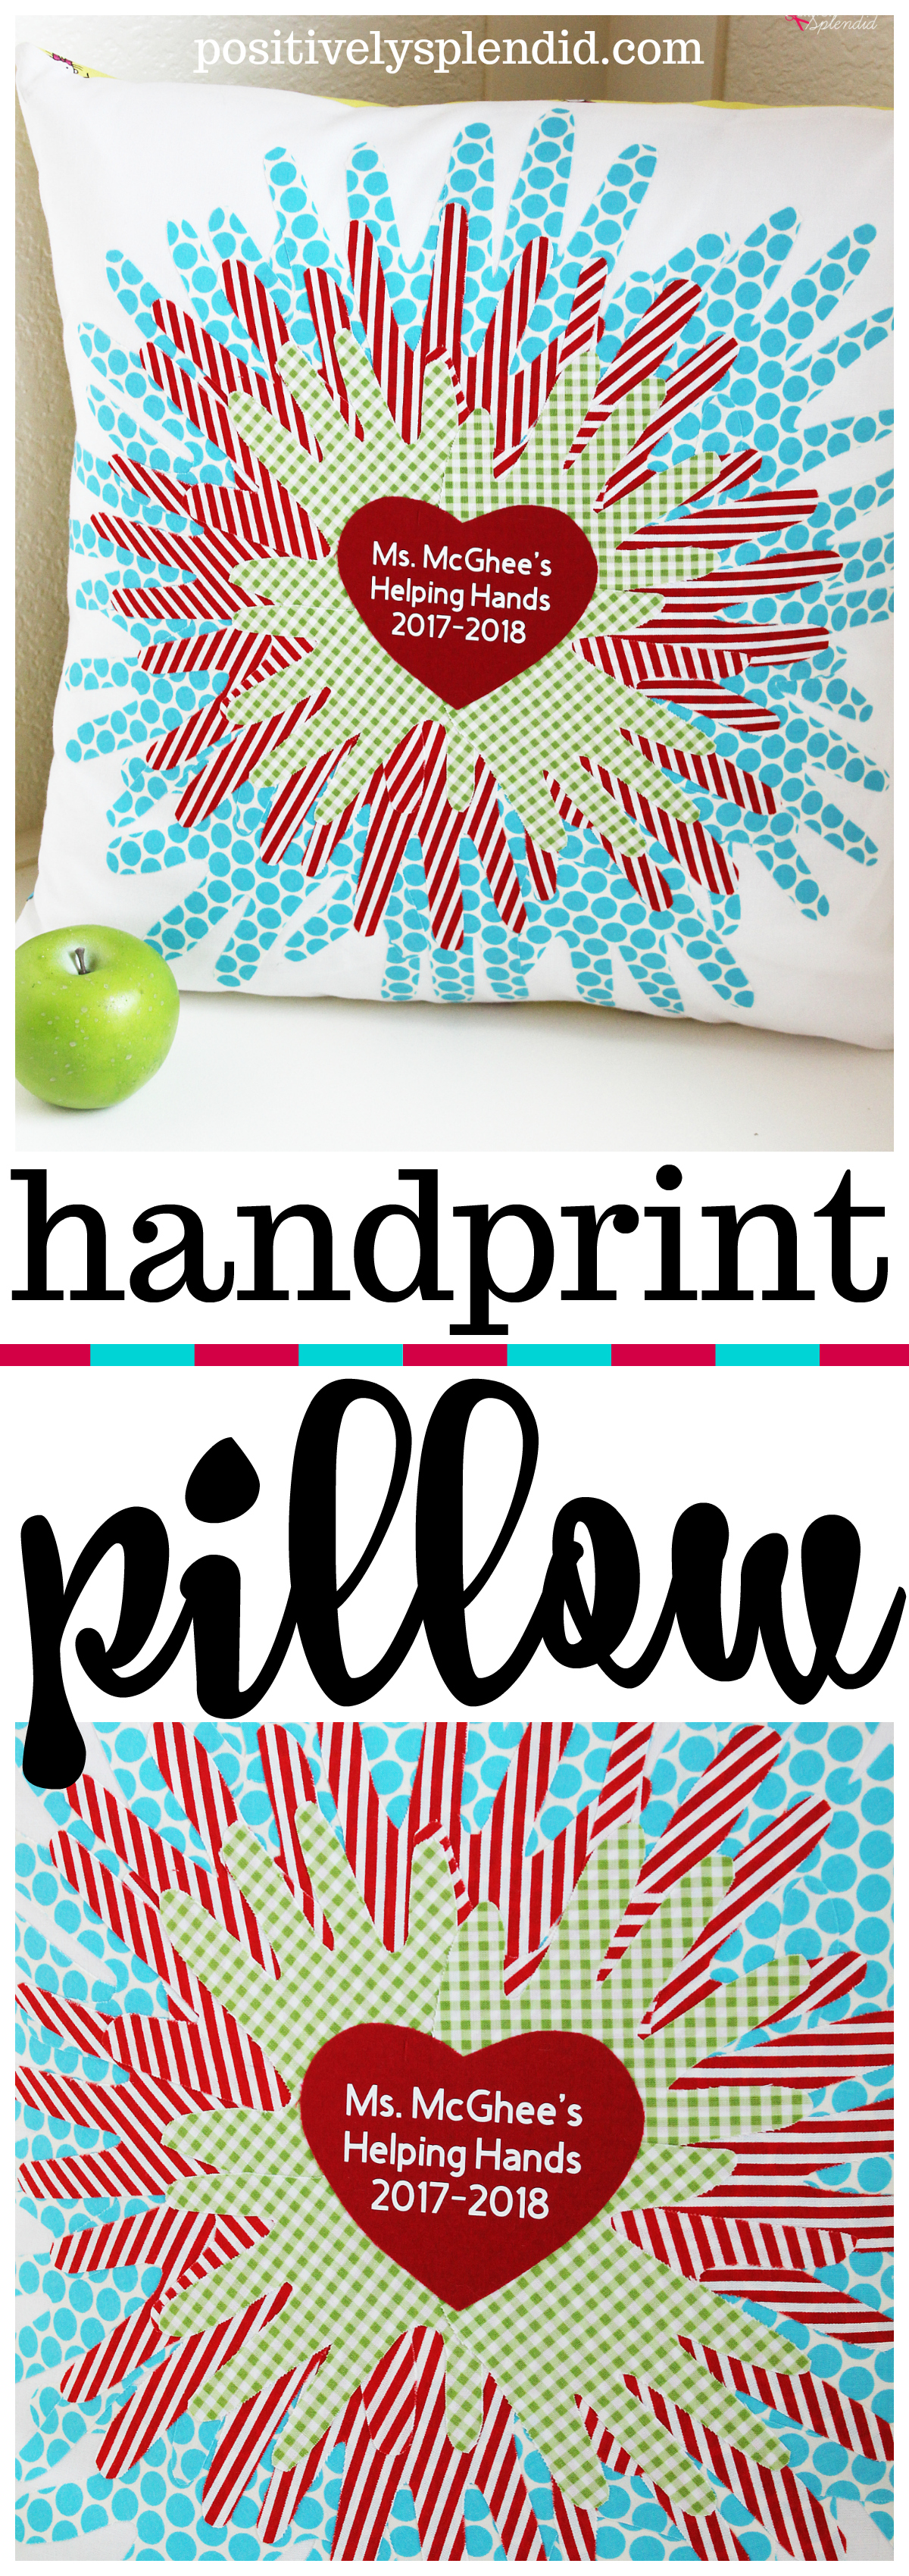 Handprint Pillow Class Project Idea - Great for a silent auction!